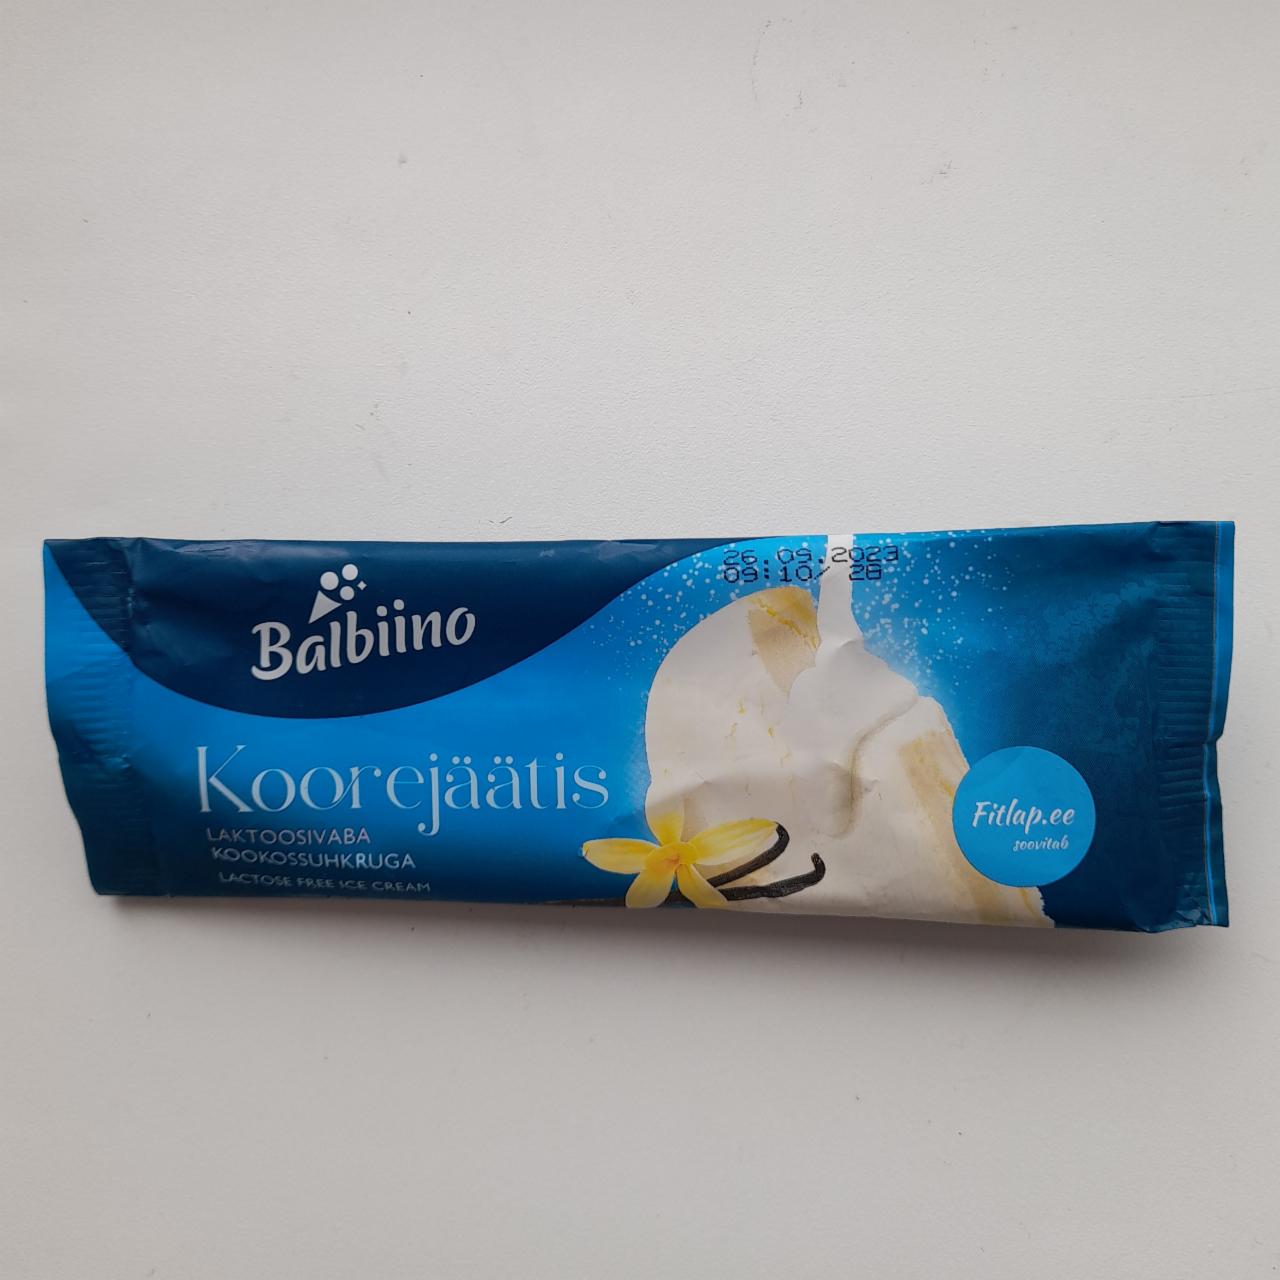 Фото - Безлактозное мороженое с кокосовым сахаром Balbiino